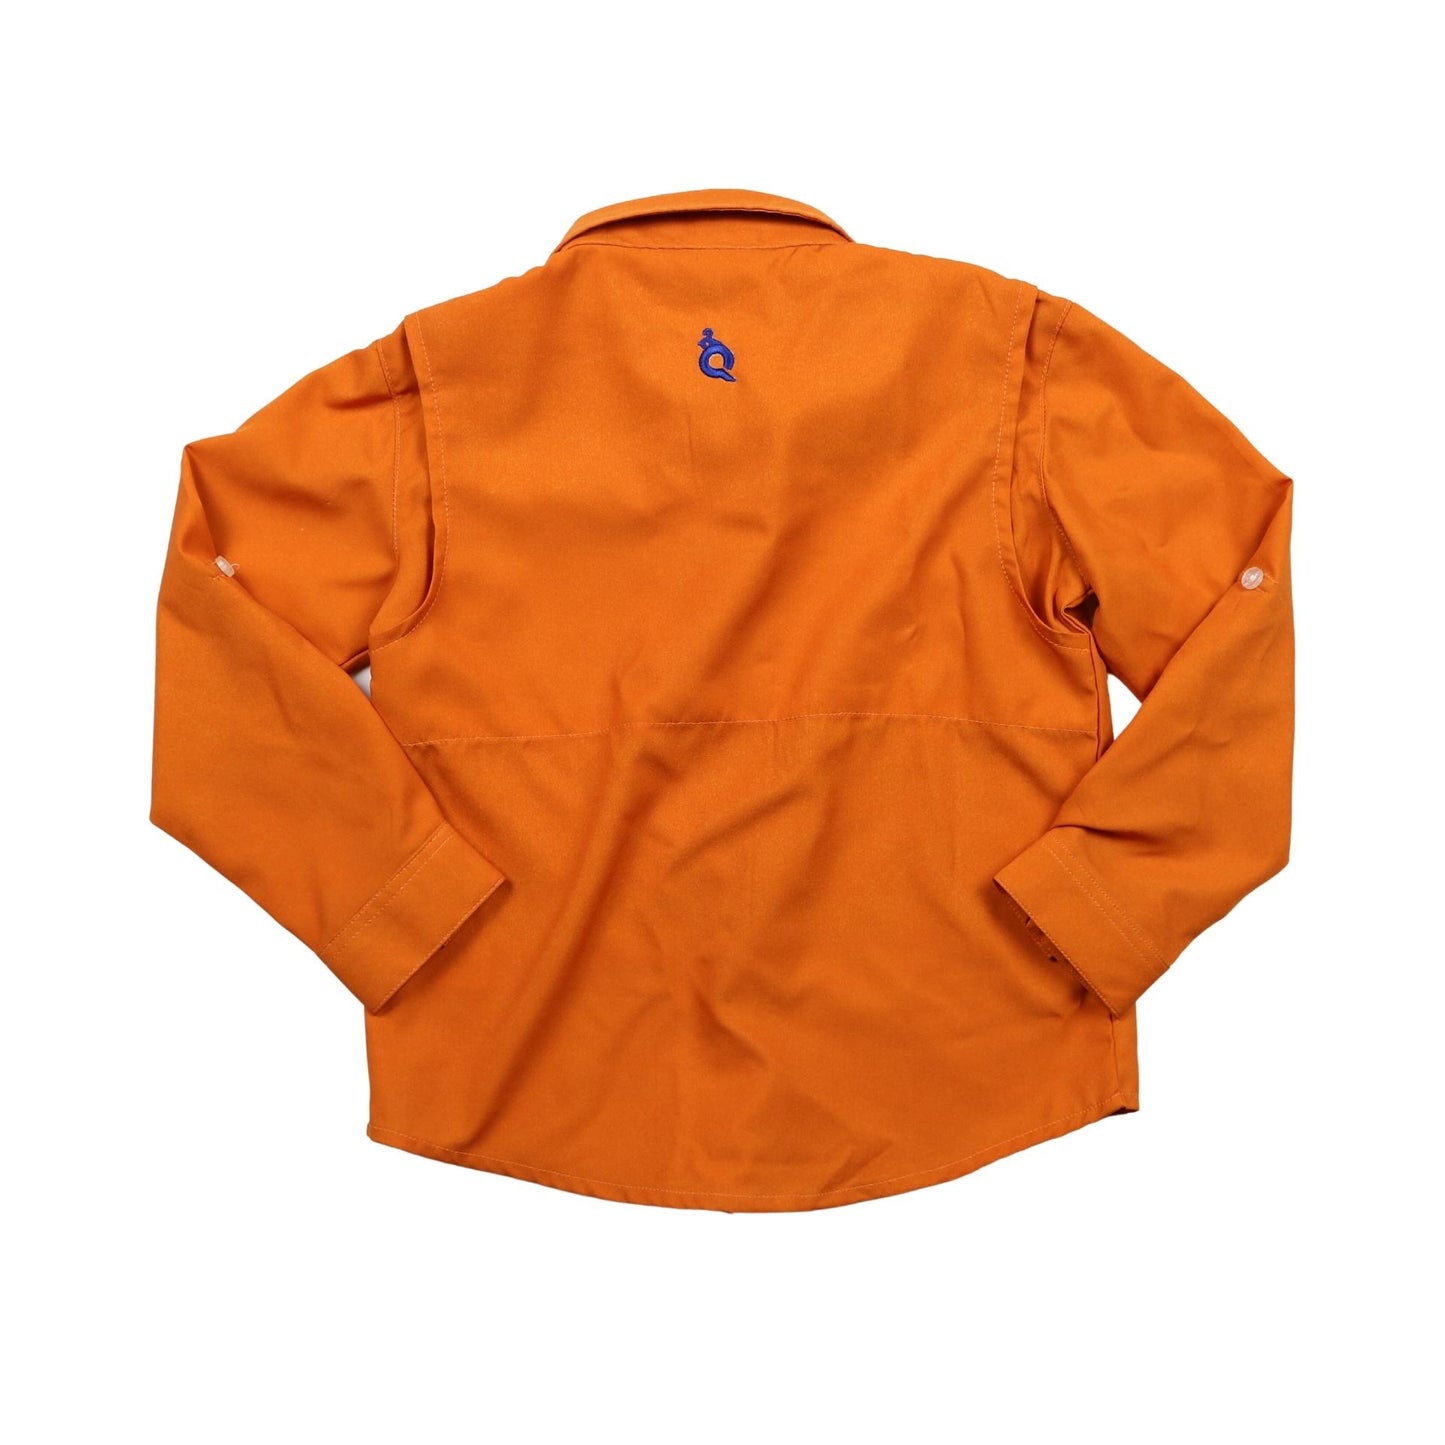 Blaze Orange & Khaki Long Sleeve Shirt